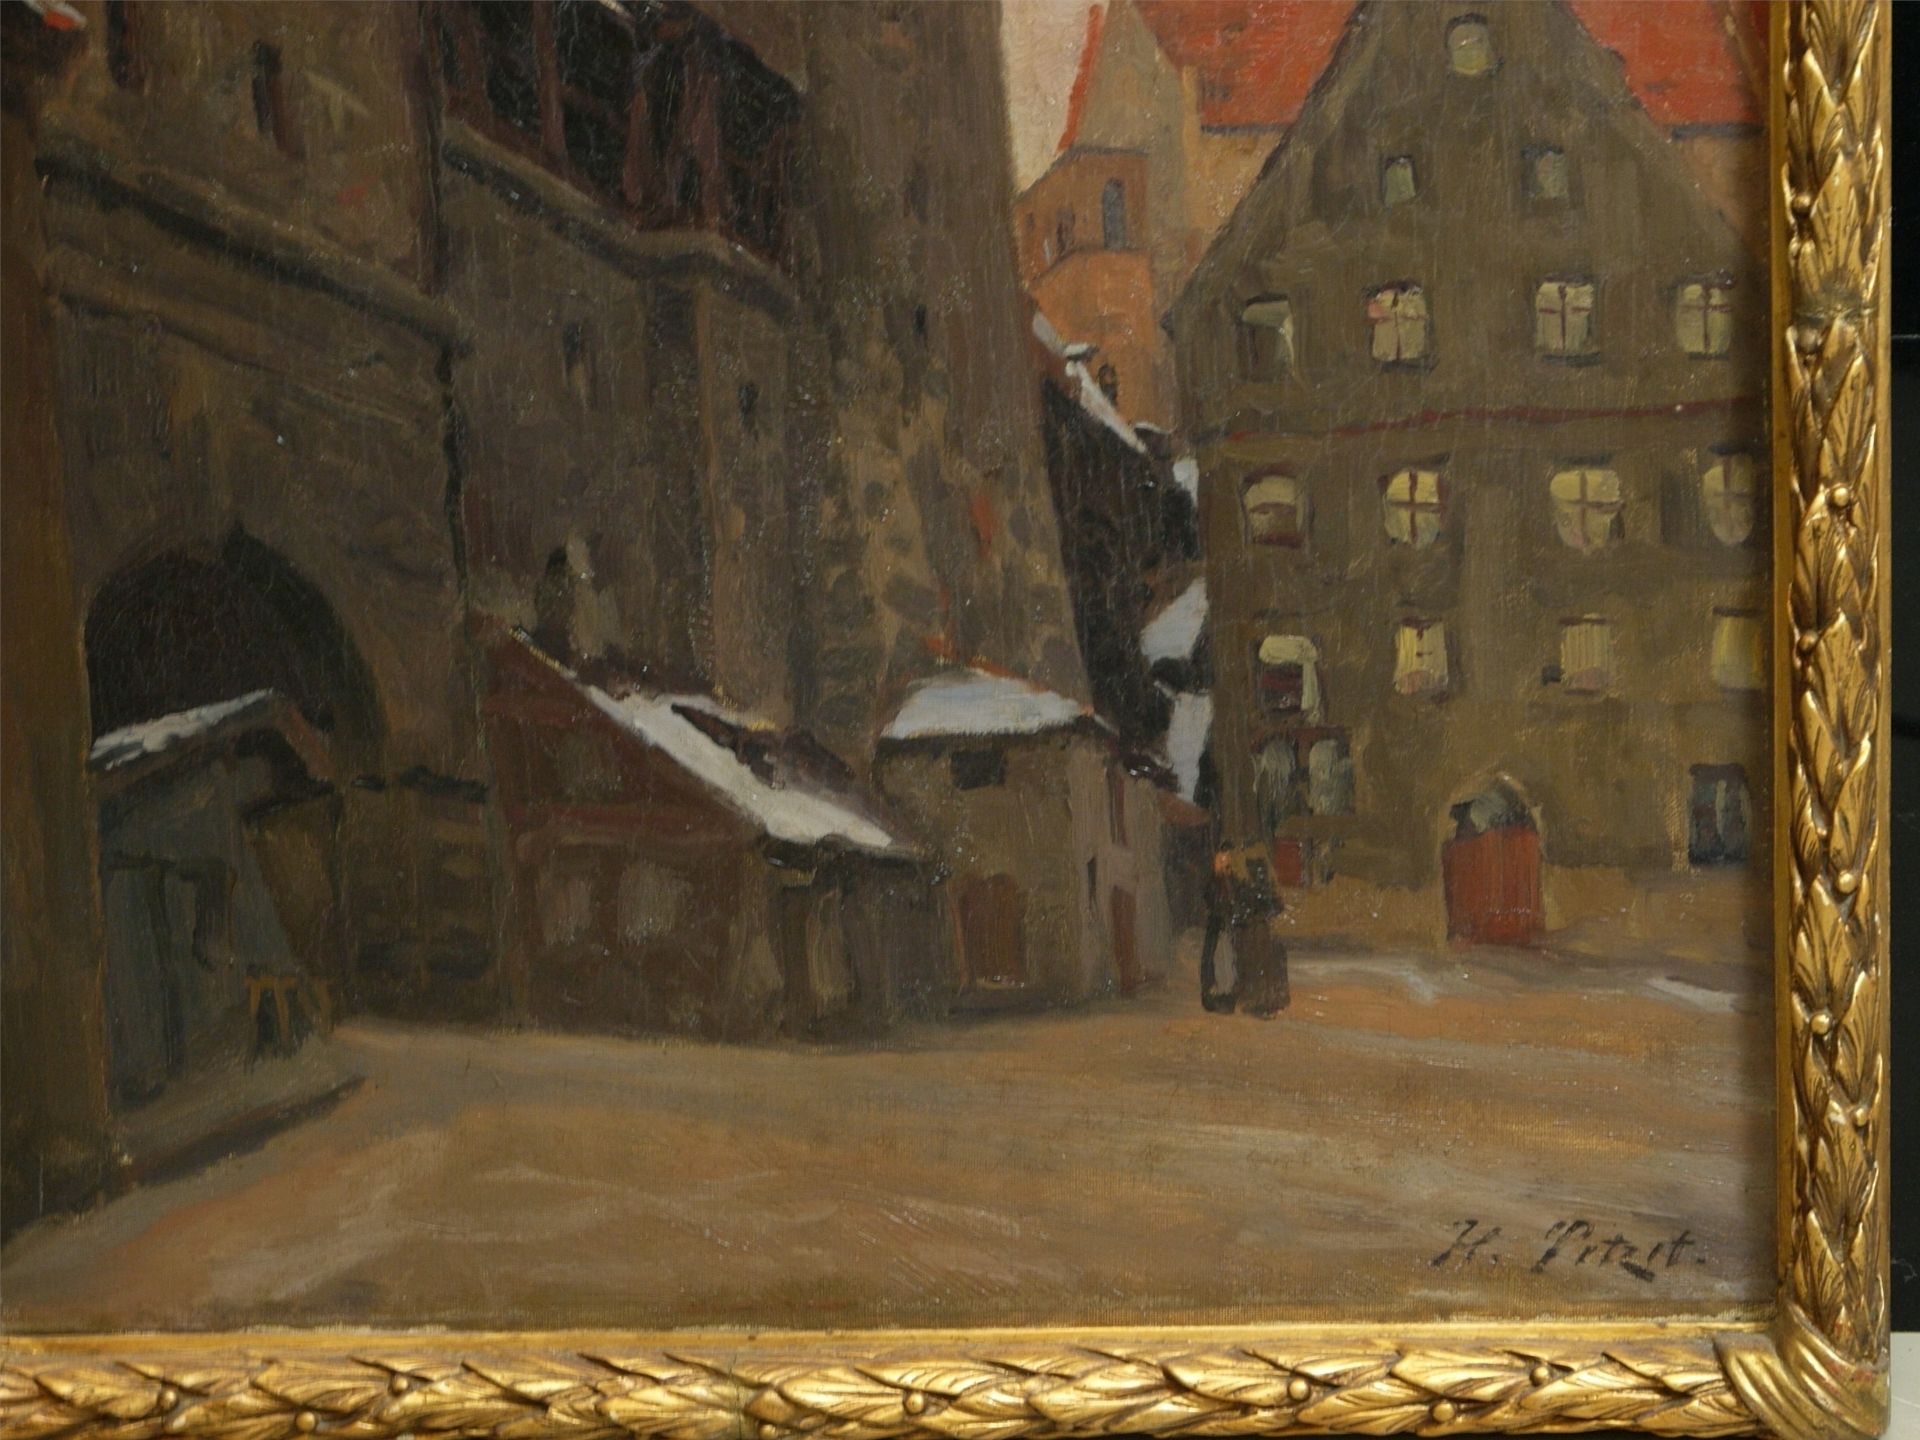 Petzet, Hermann (1860-1935) - Tiergärtnertorplatz in Nürnberg - Image 7 of 8